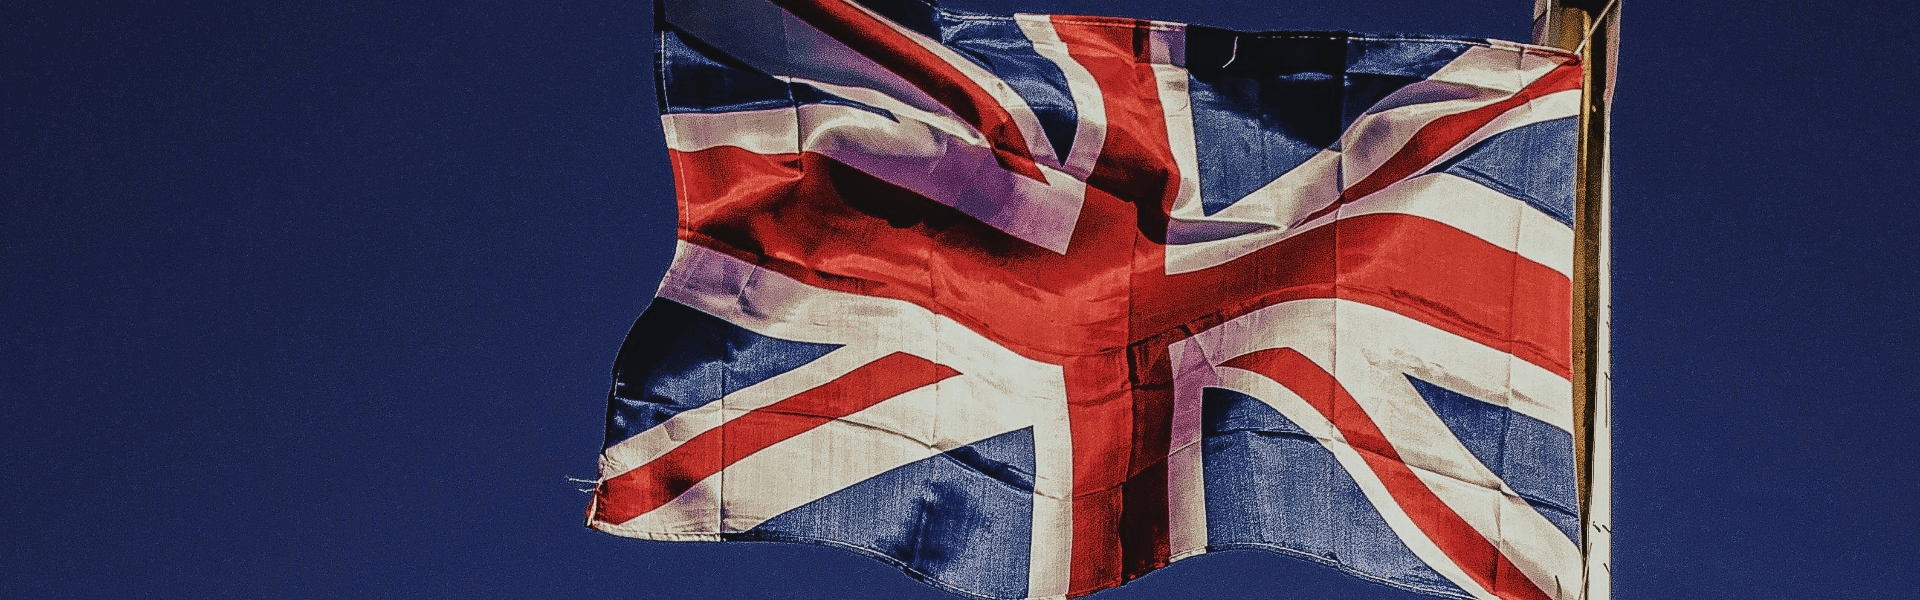 Hiring international talent in a post Brexit Britain